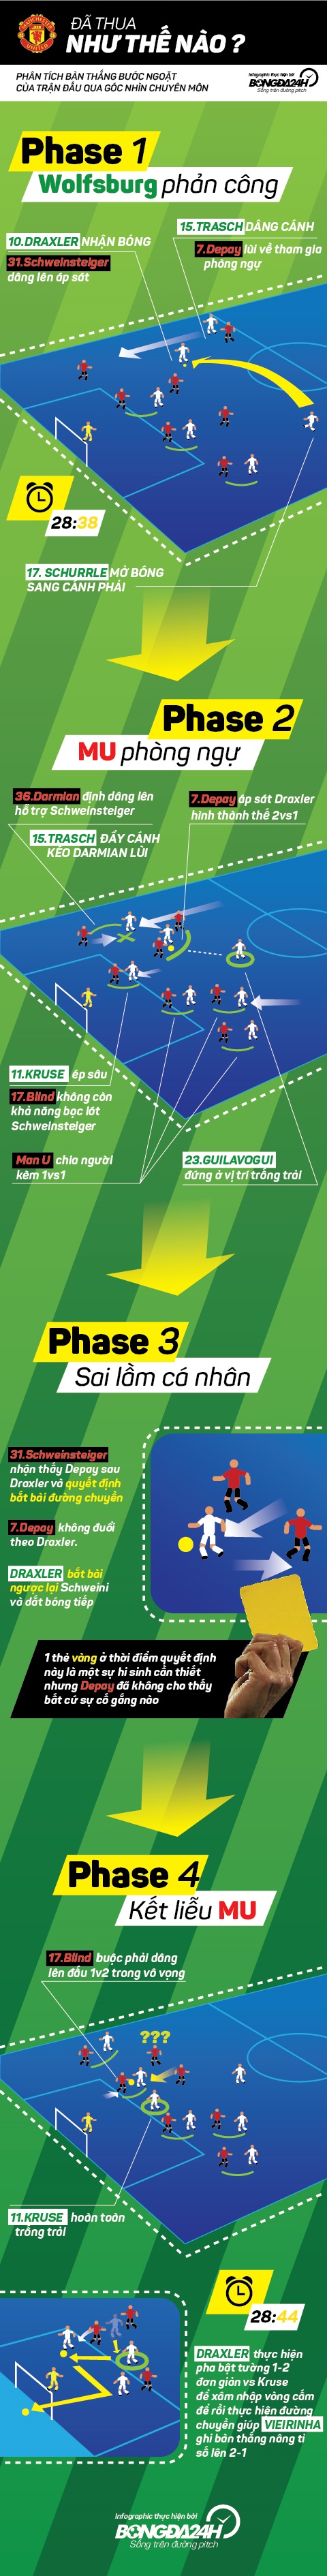 Infographic phan tich ban thang quyet dinh da bay MU khoi Champions League hinh anh